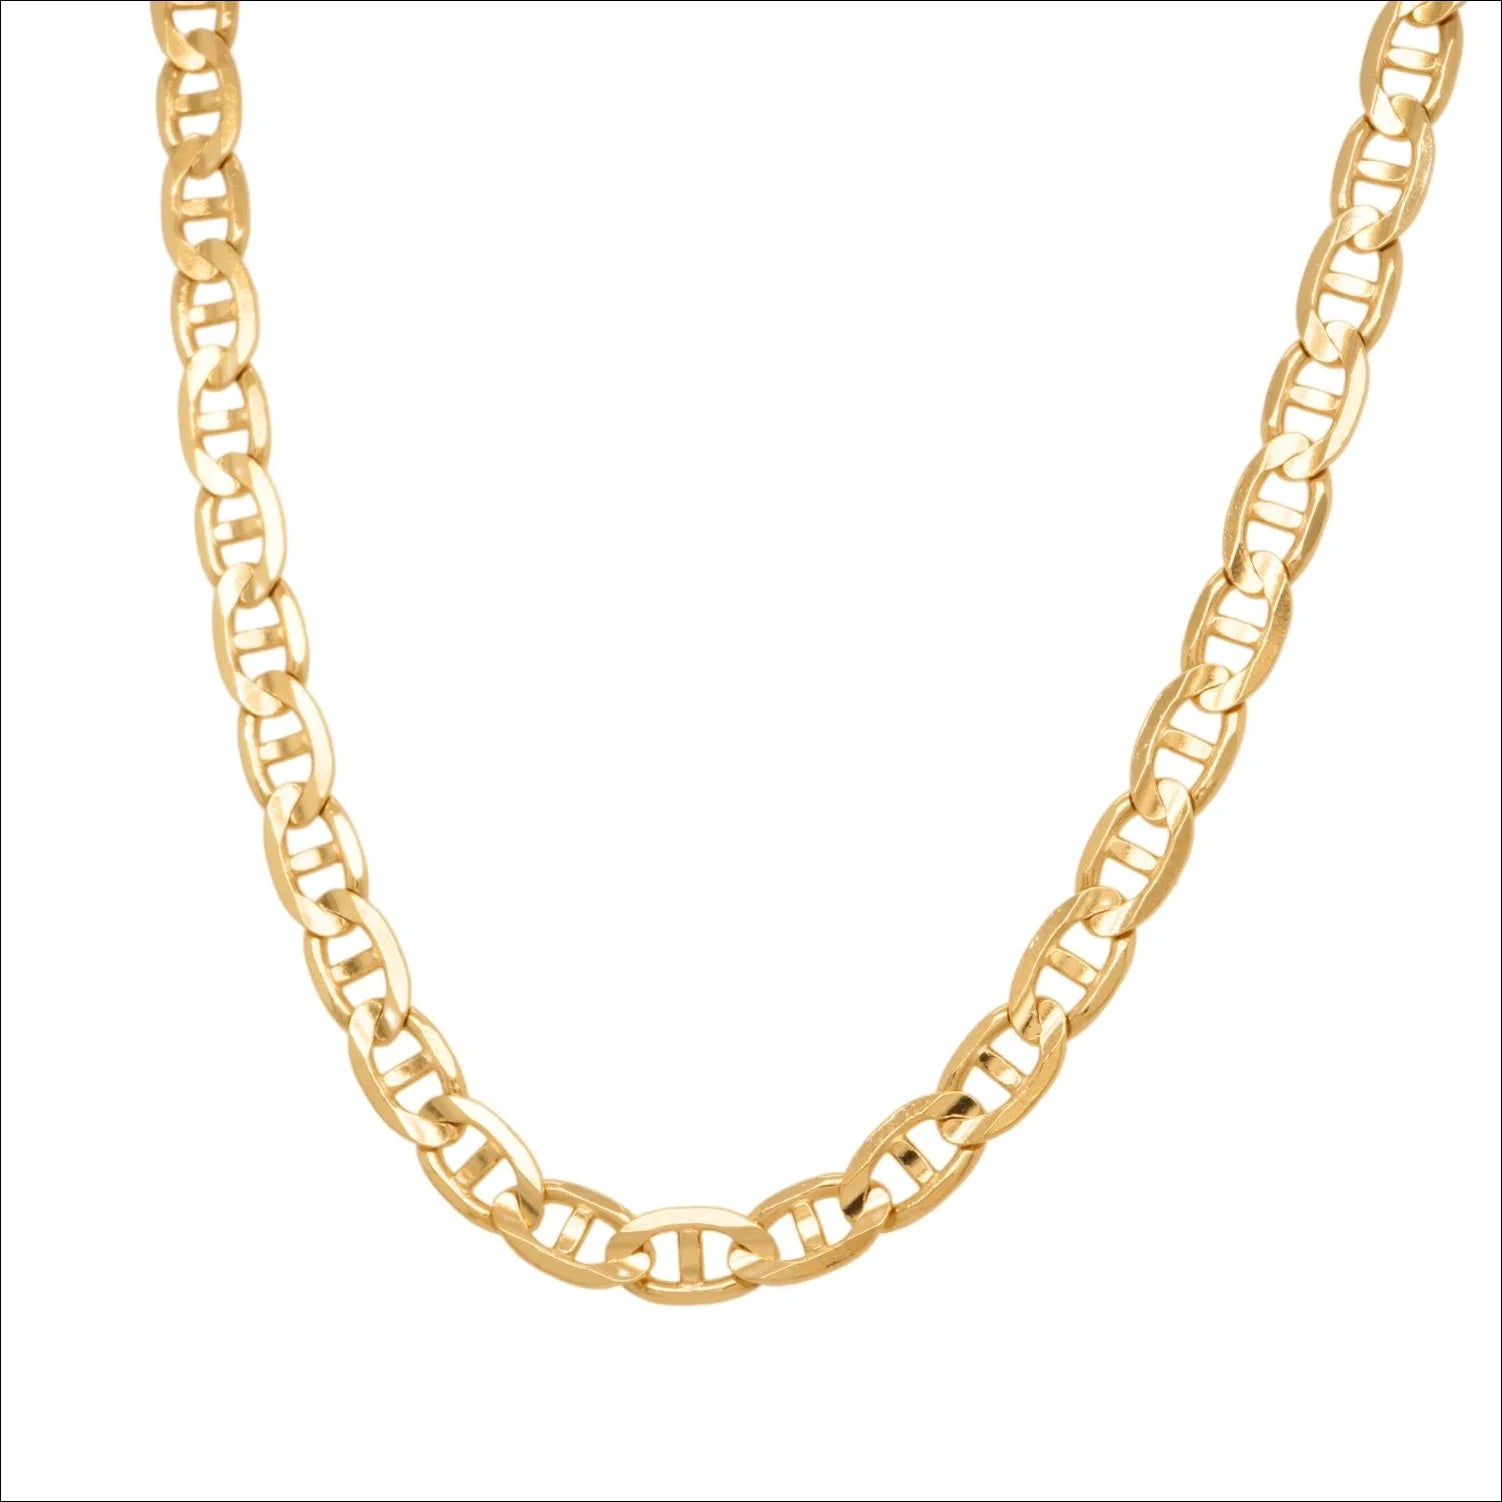 Elegant 18k gold anchor chain | Chains